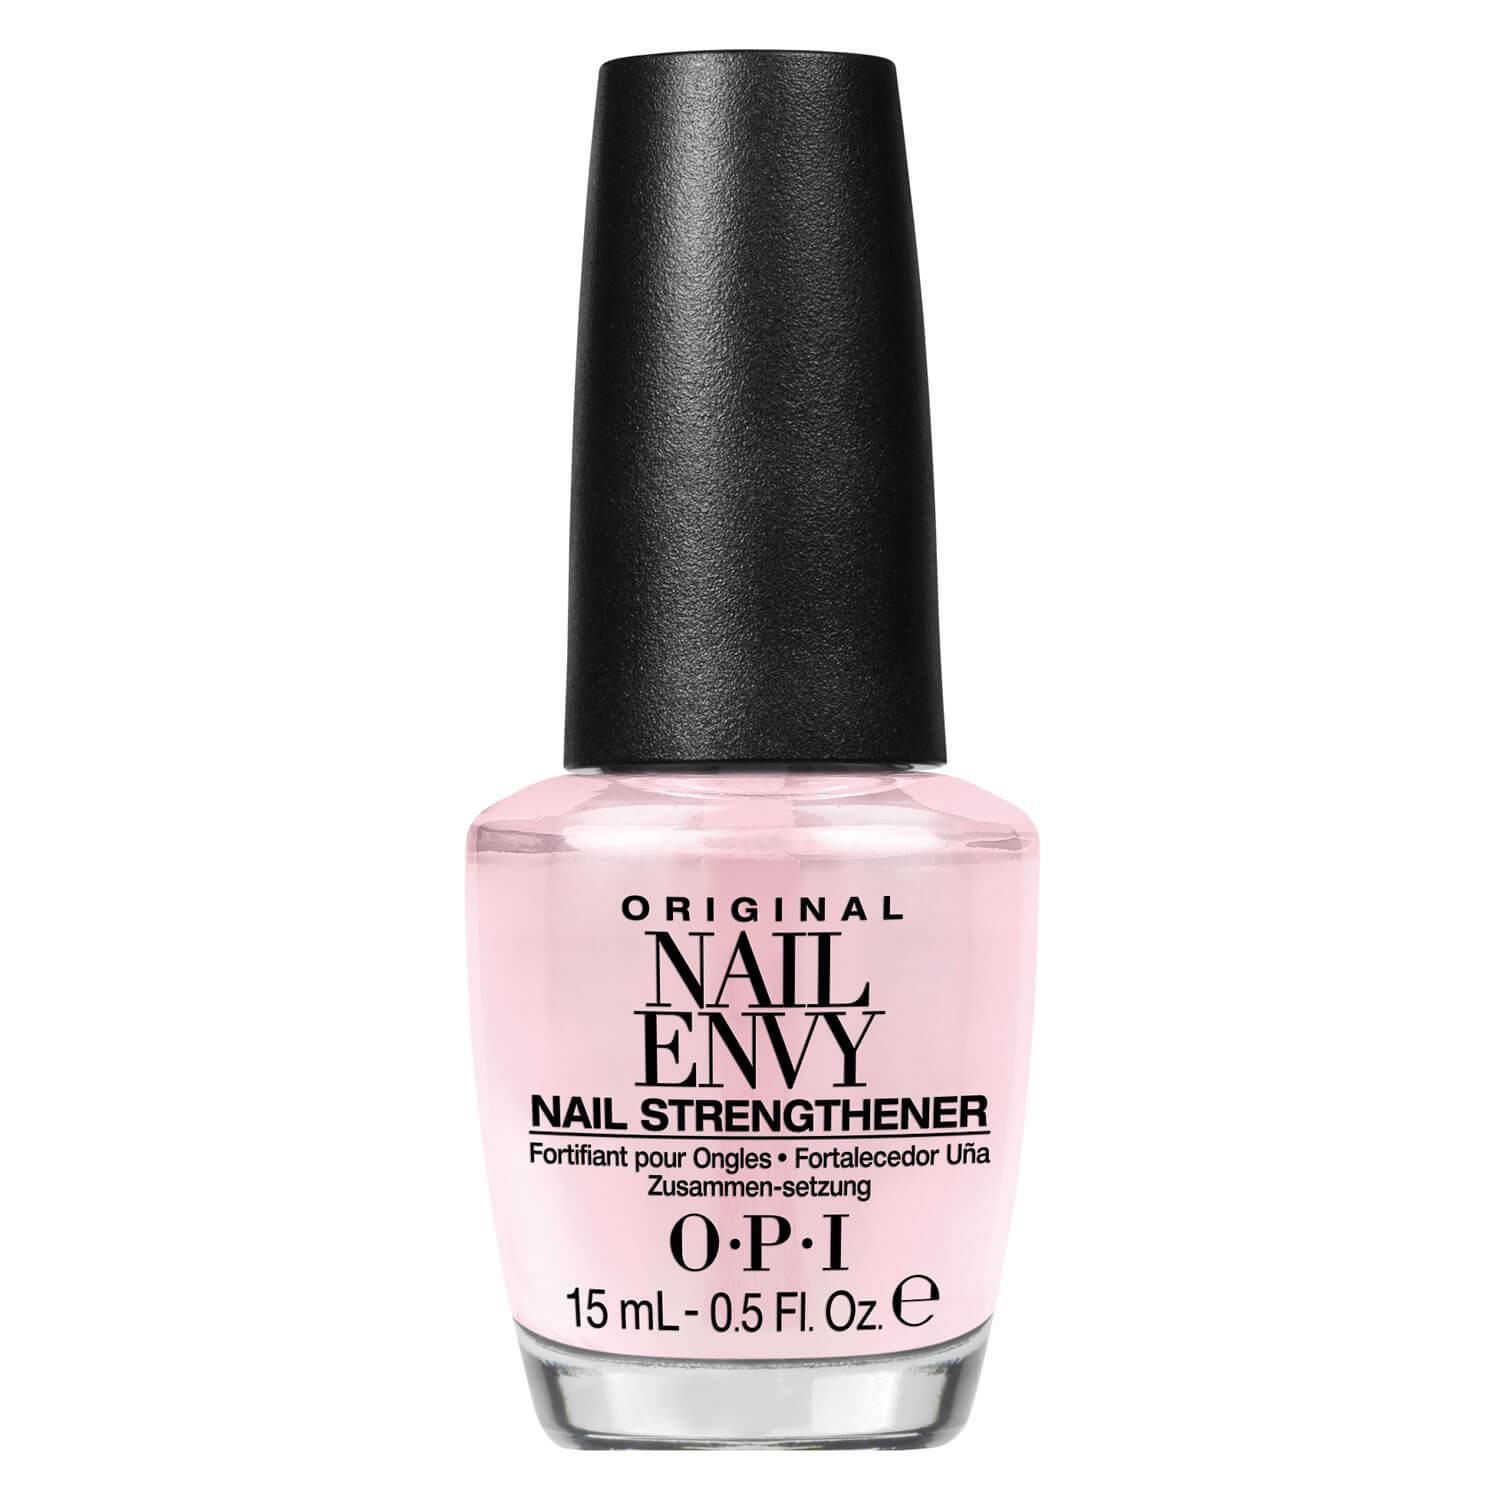 Nail Strenghtener - Tinted Nail Envy Pink to Envy